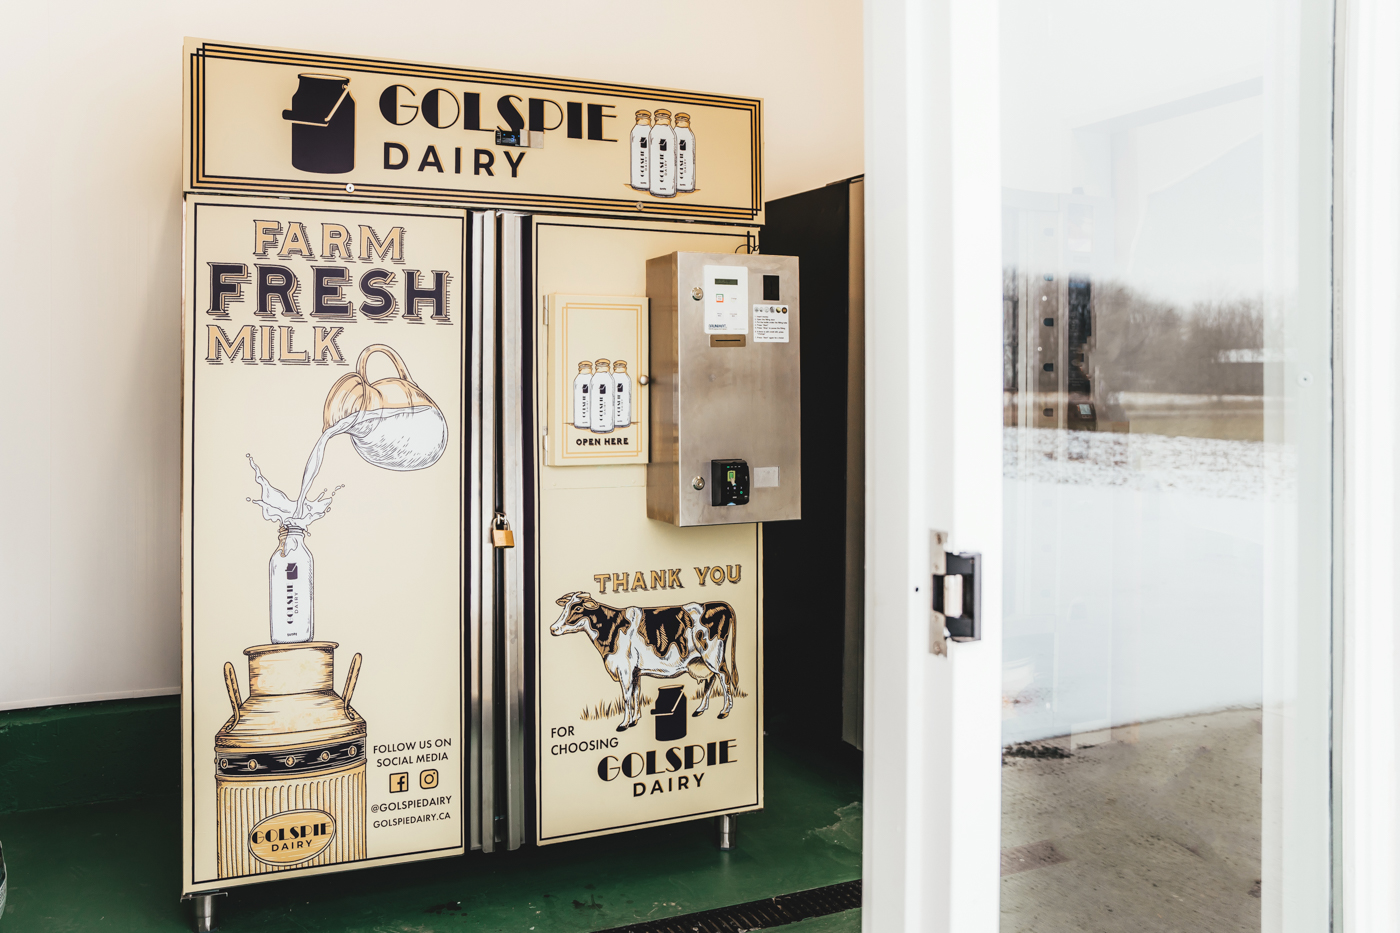 milk vending machine at the Golspie Dairy storefront